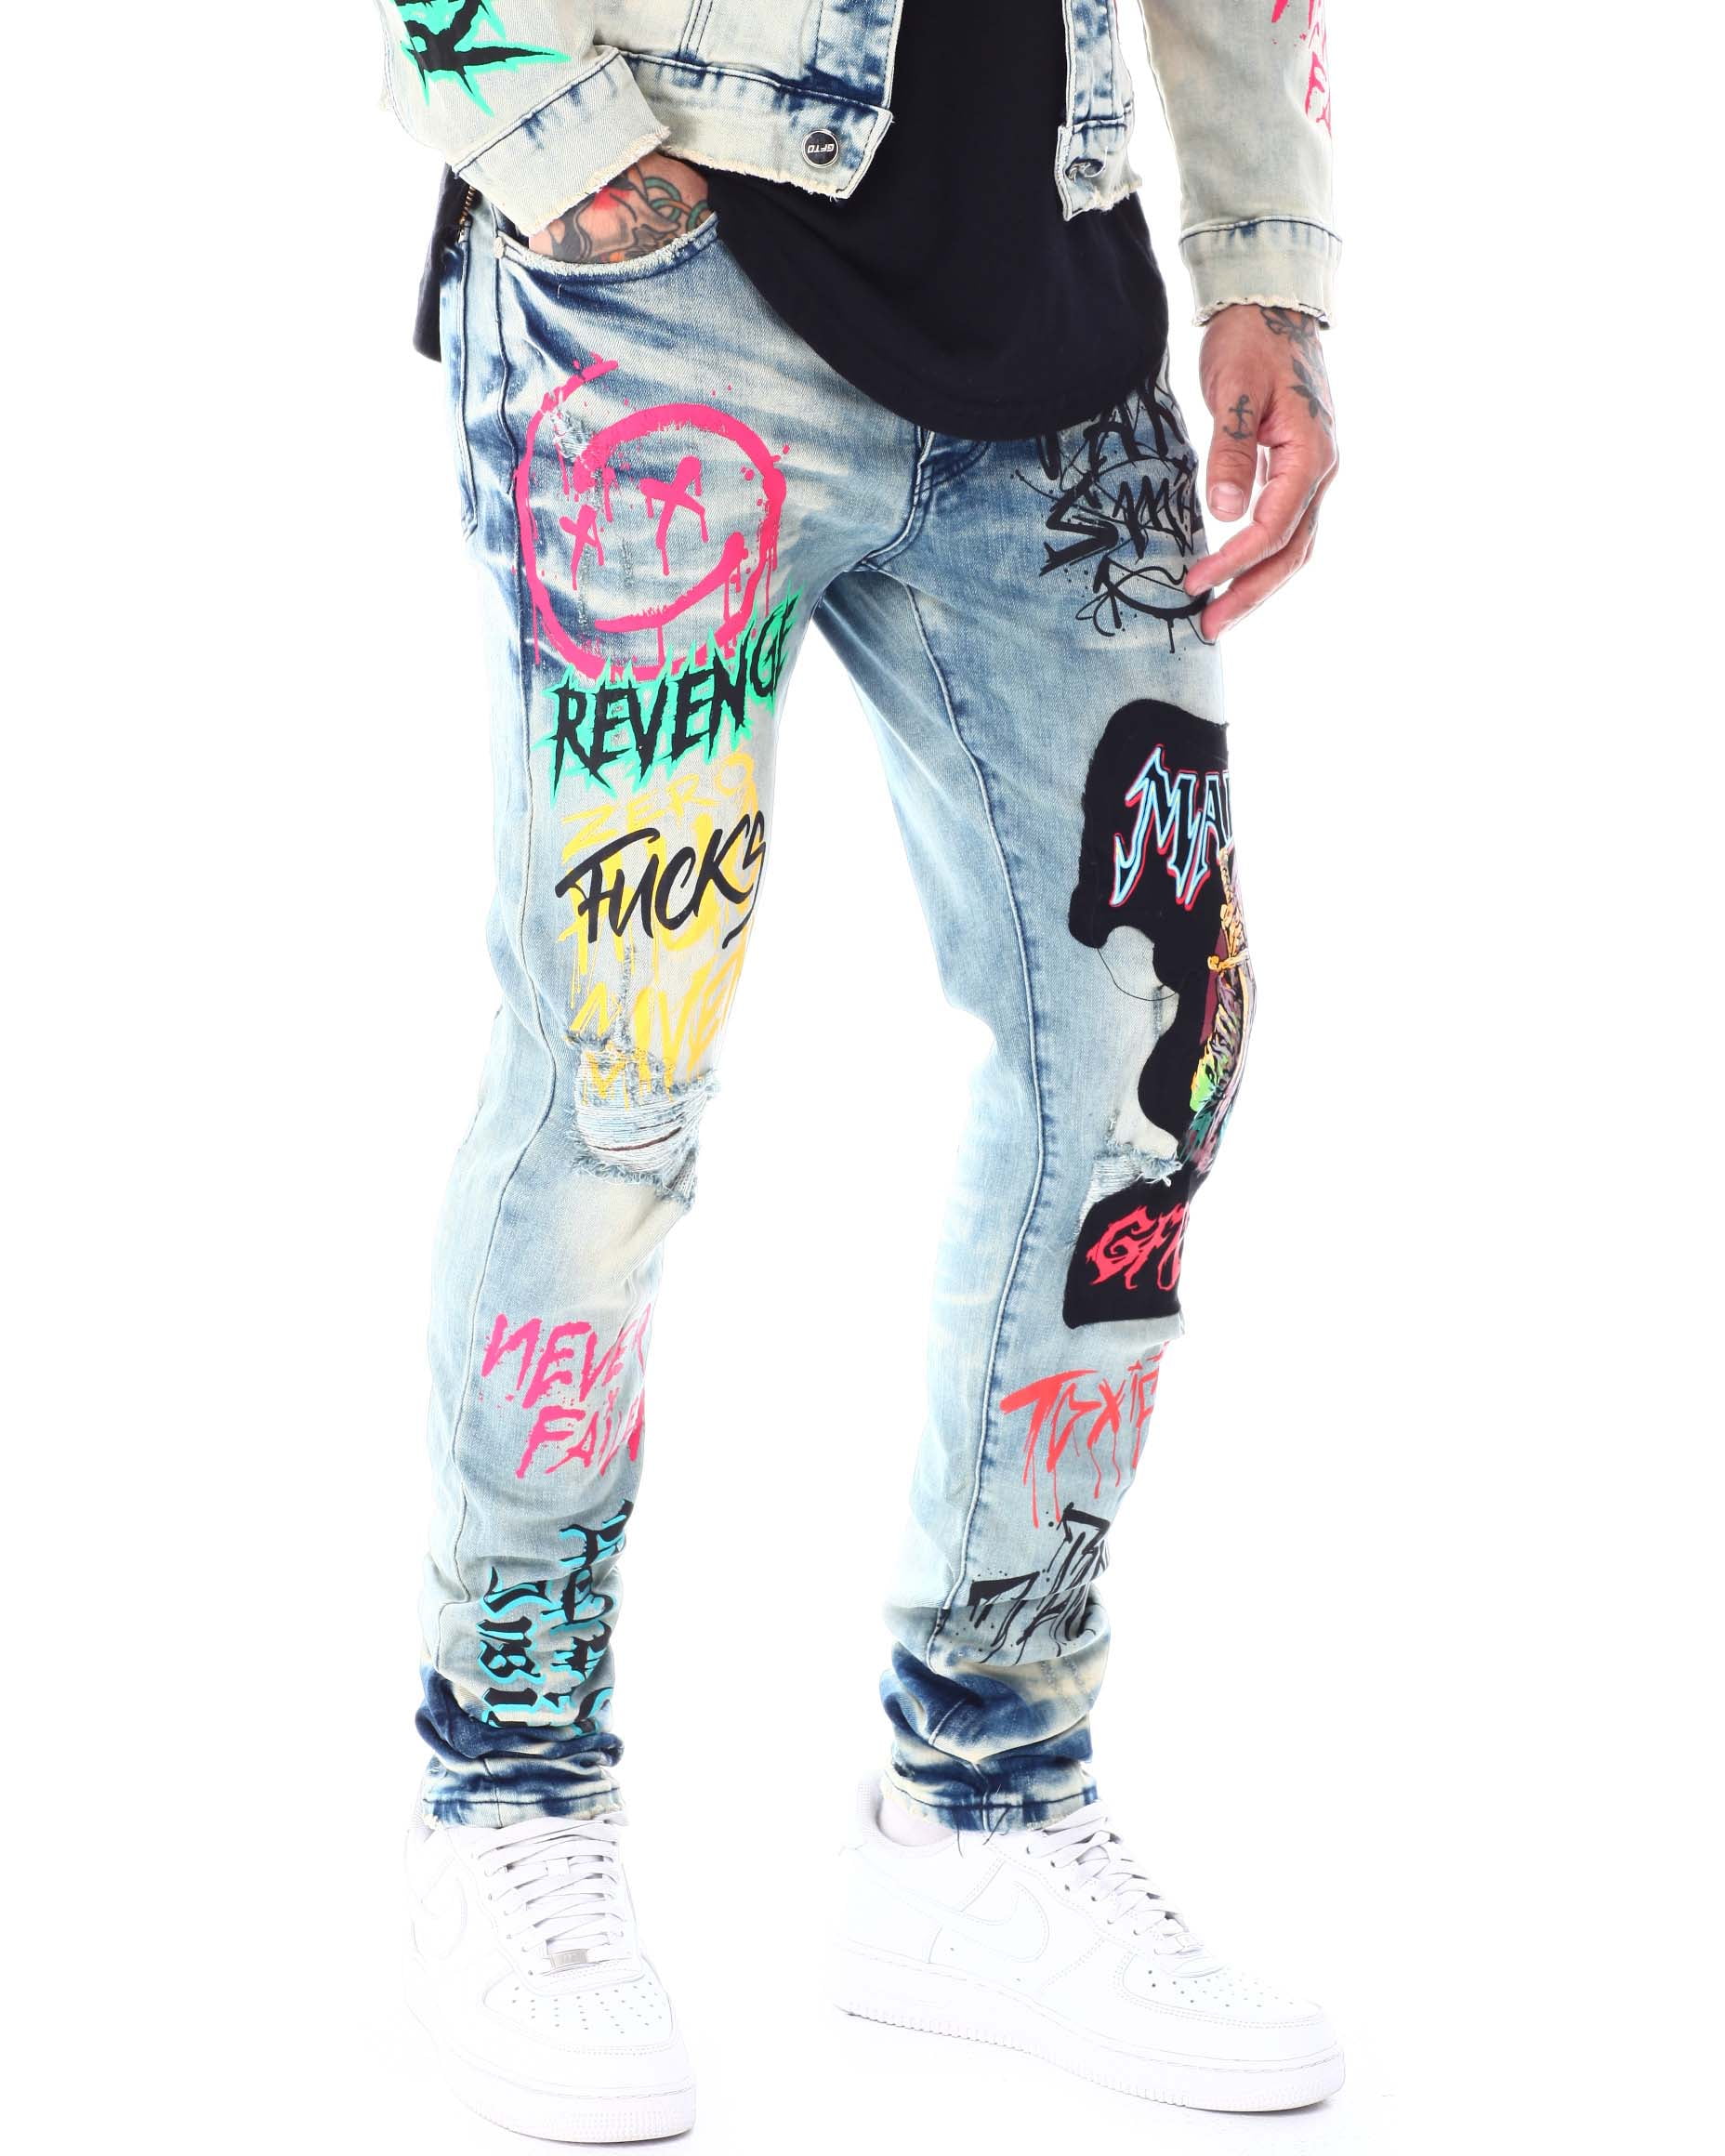 GFTD LA Los Angeles Men's Ozz Skinny Fit Painted Details Distressed Rip  Jeans (36, Blue)